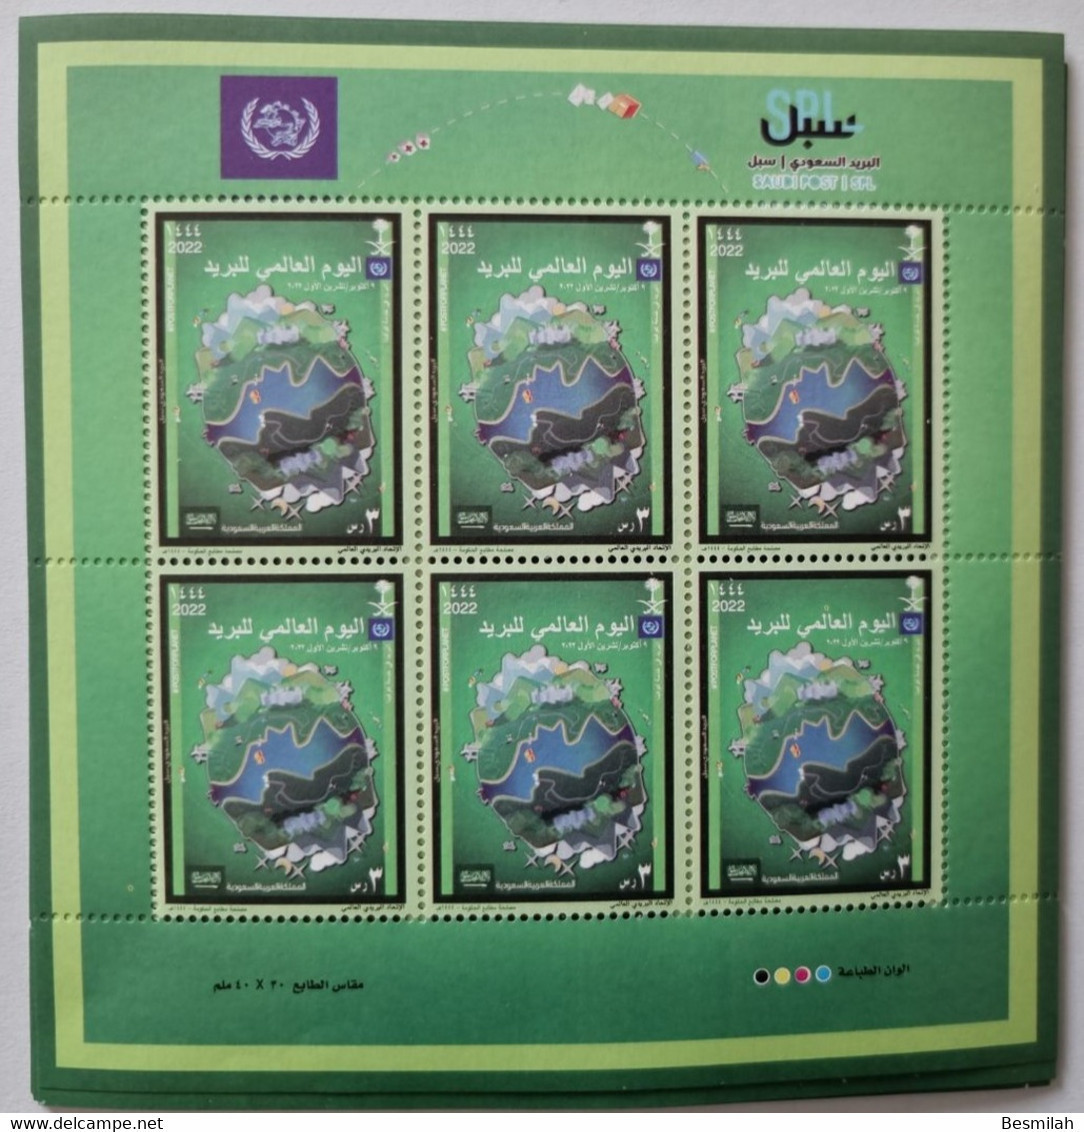 Saudi Arabia Stamp World Post Day 2022 (1444 Hijry) 7 Pcs Of 3 Riyals With FDVC (Very Rare Very Limited Printed) - Arabia Saudita